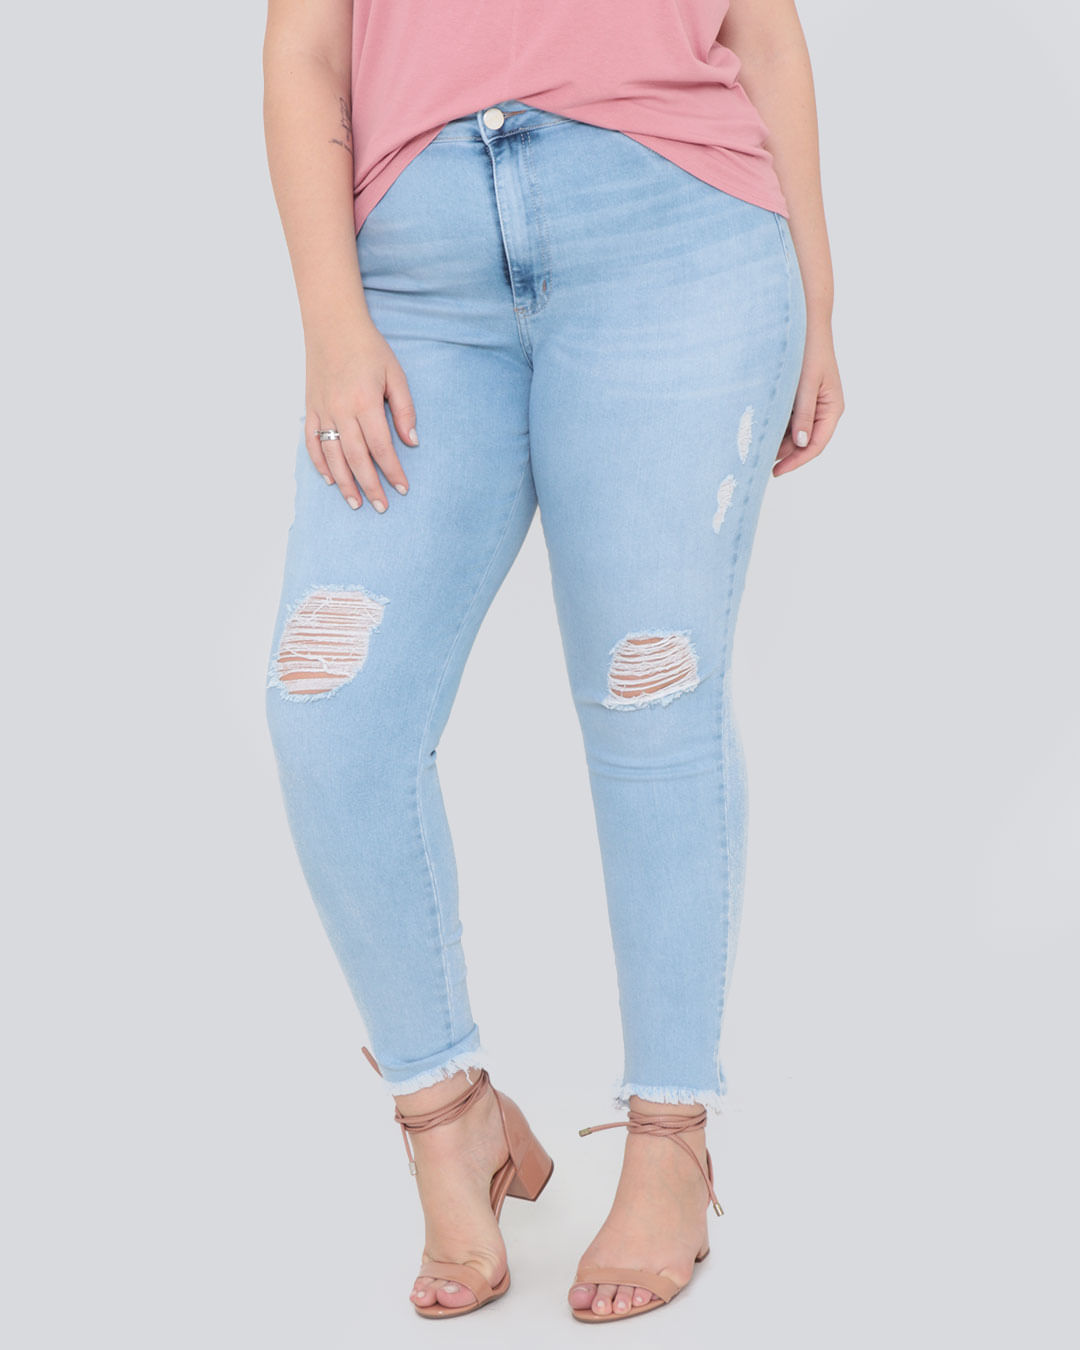 Calca-Jeans-Feminina-Plus-Size-Destroyed-Azul-Claro